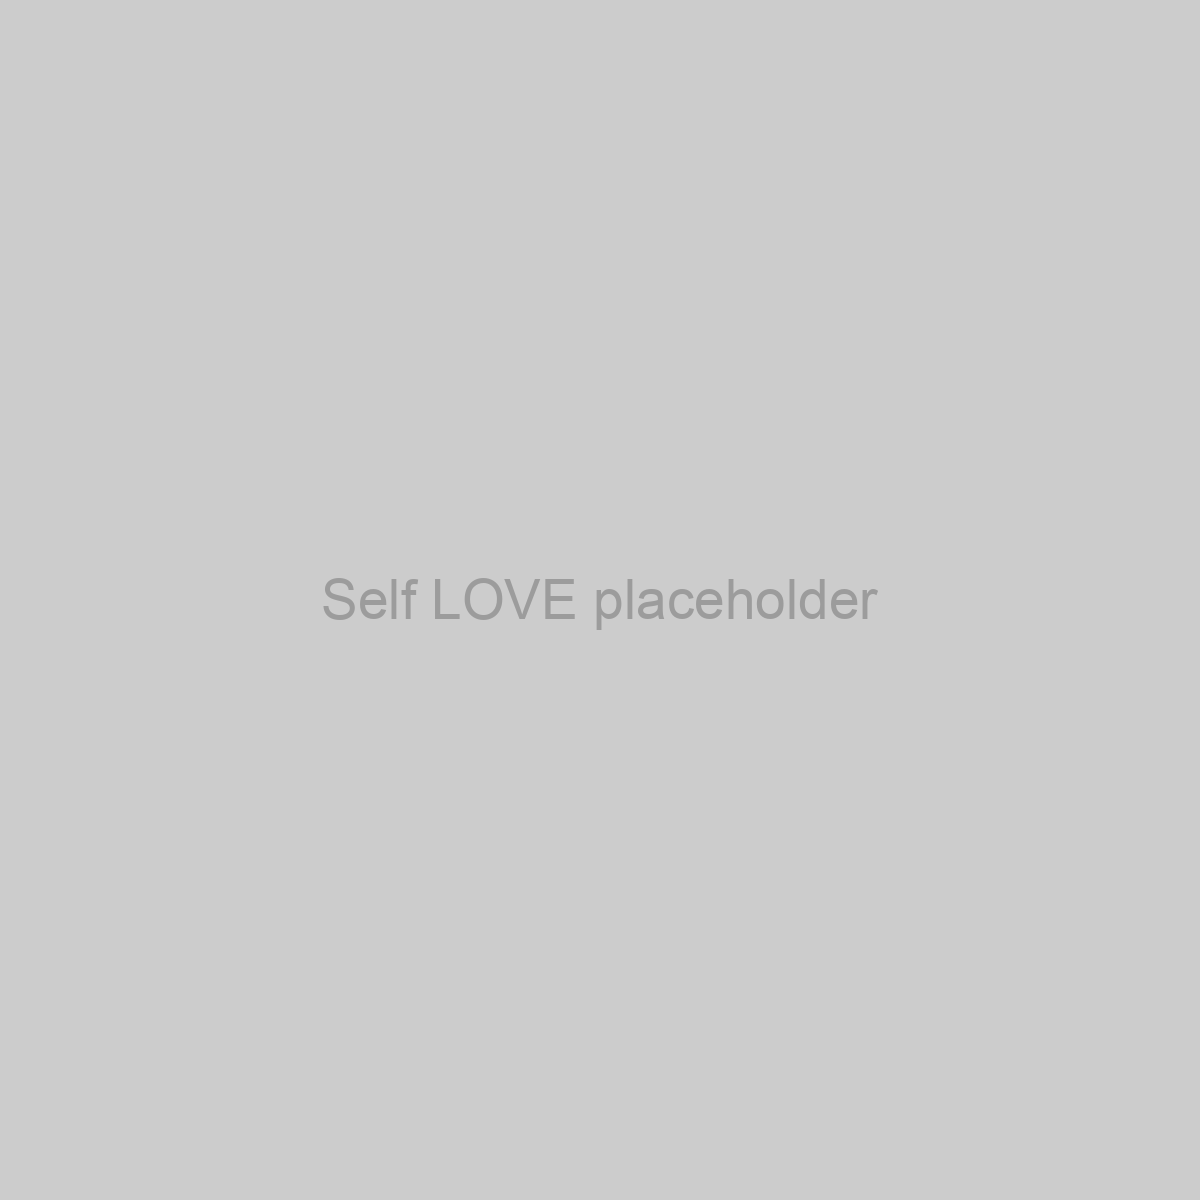 Self LOVE Placeholder Image